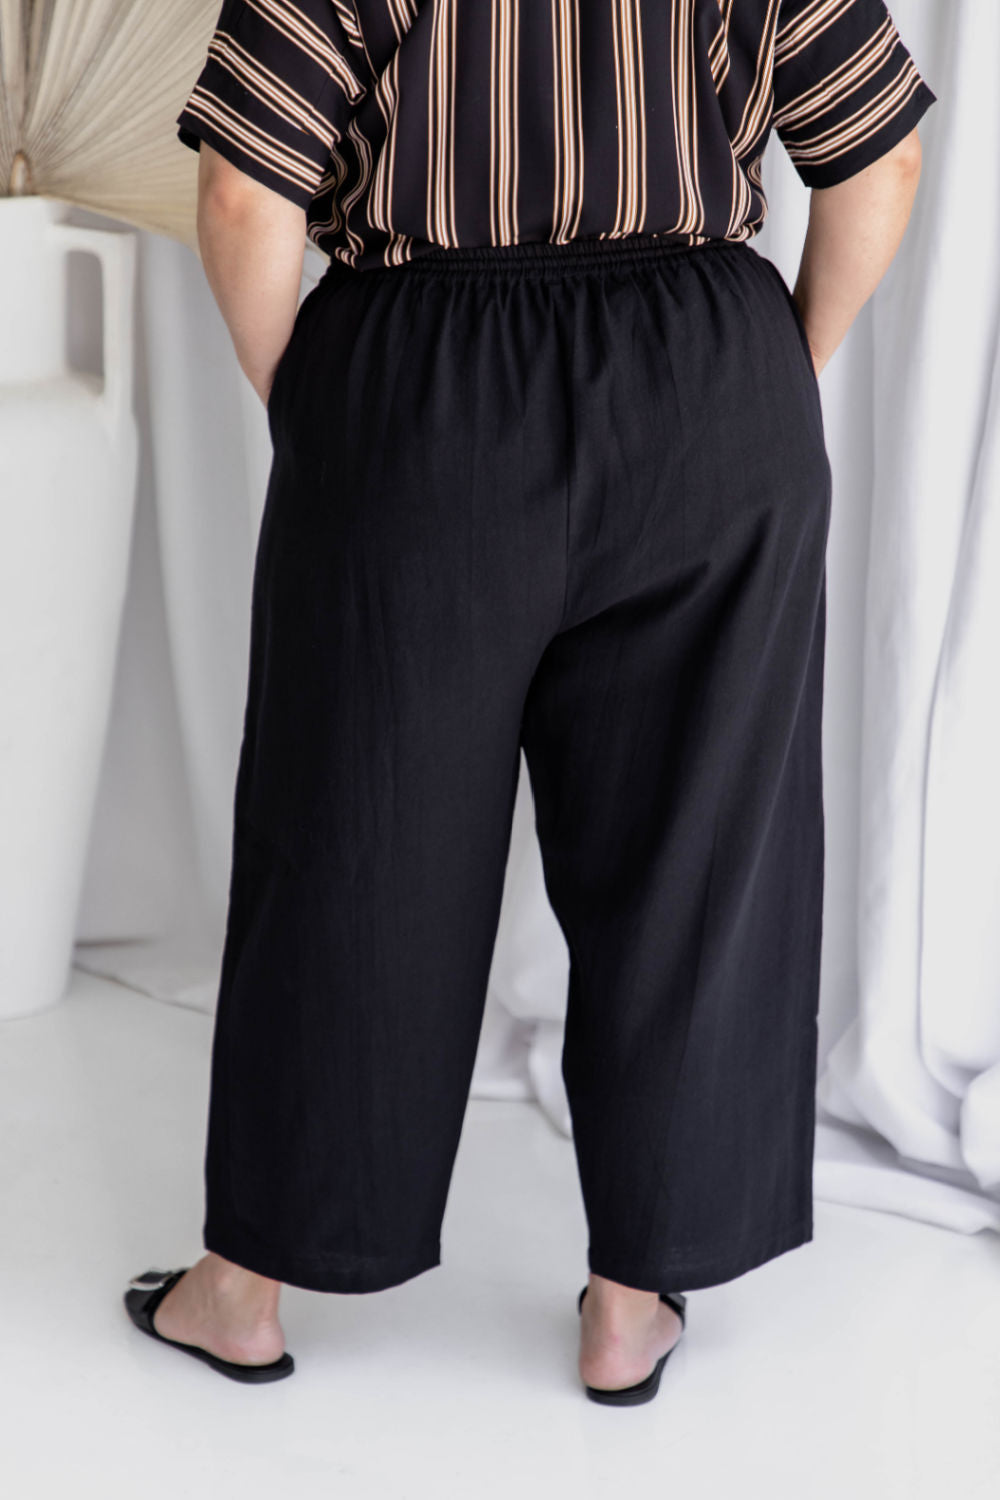 womens-long-cotton-pants-black-plus-size